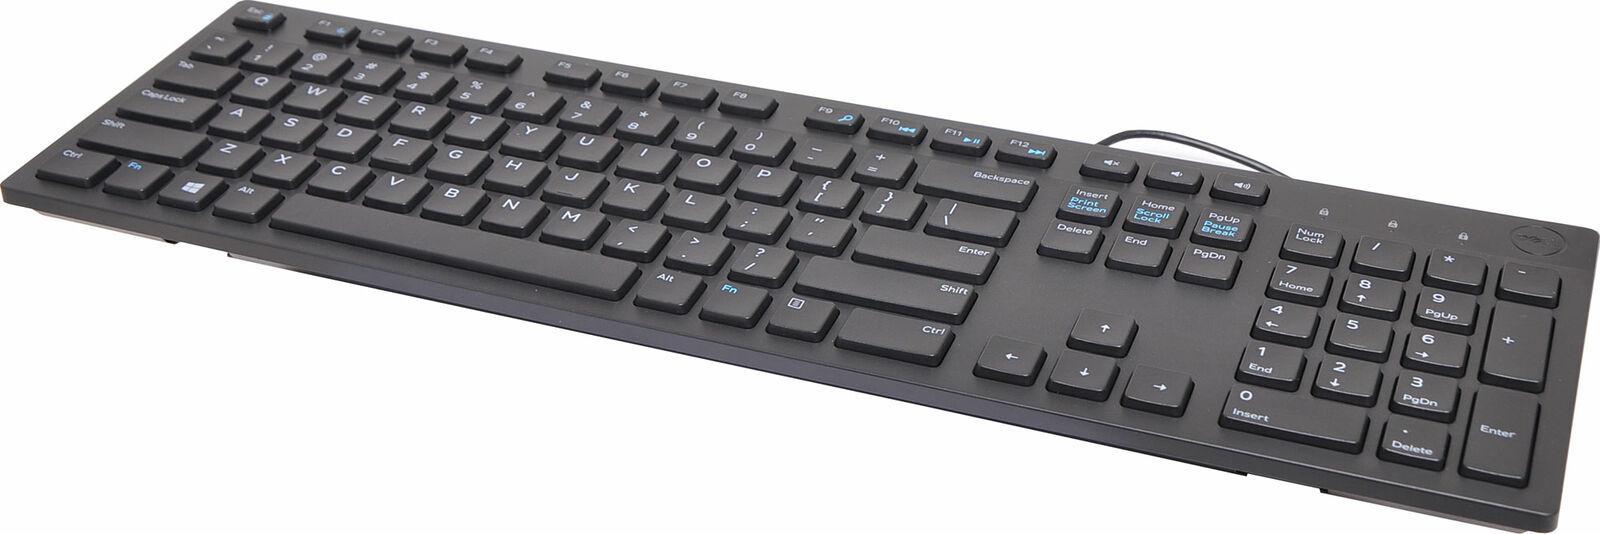 DELL KB216 Wired Multimedia Keyboard AU Stock